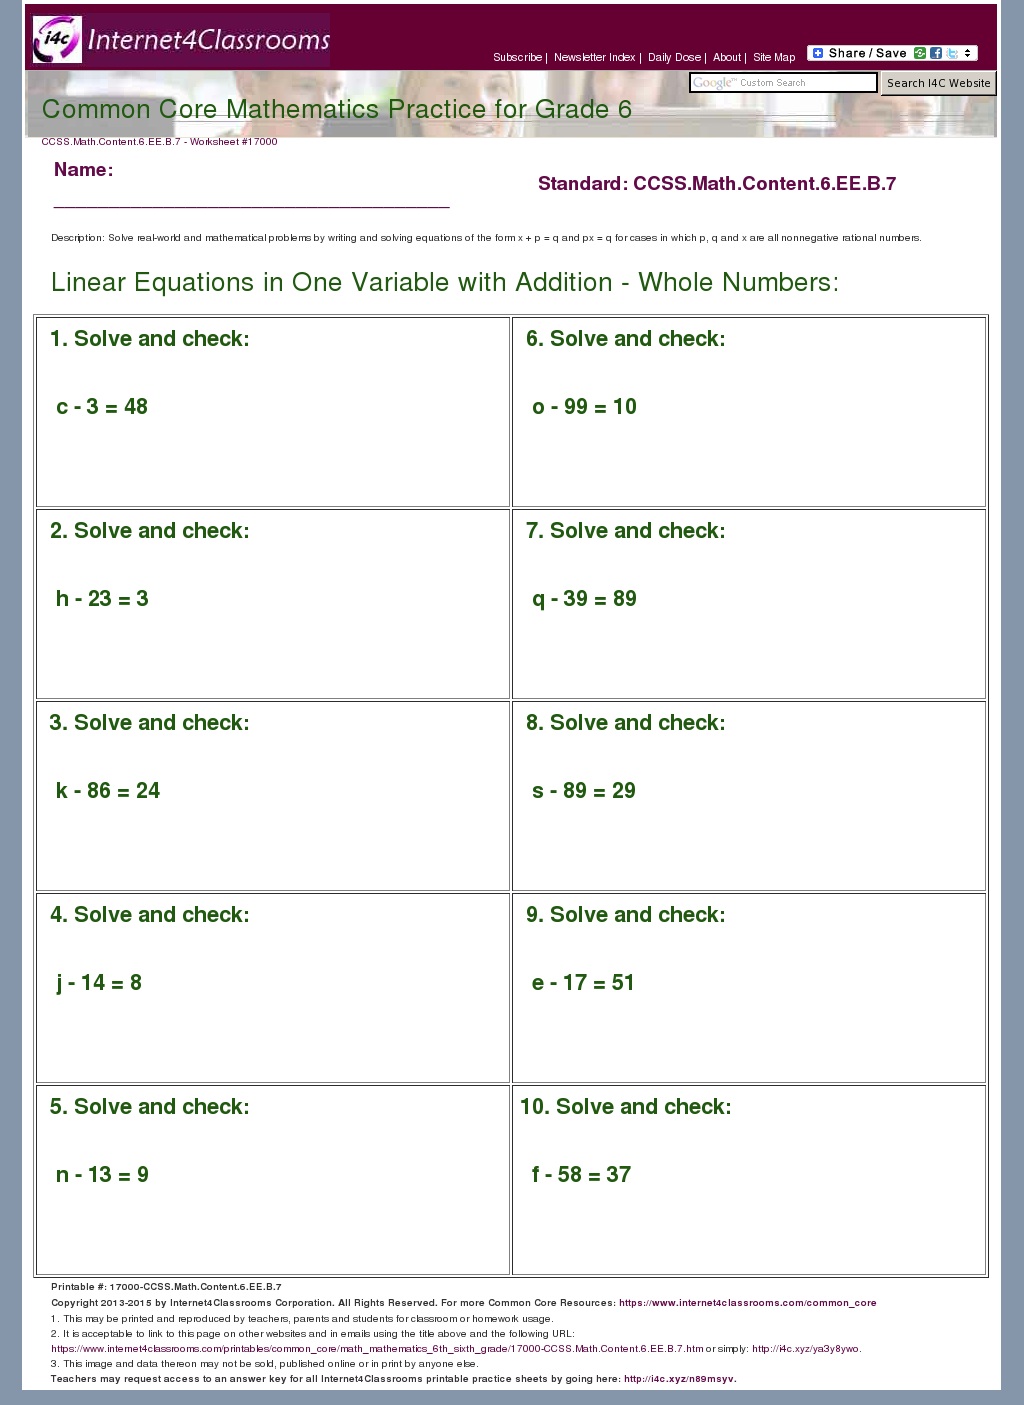 Description Download Worksheet 17000 CCSS Math Content 6 EE B 7